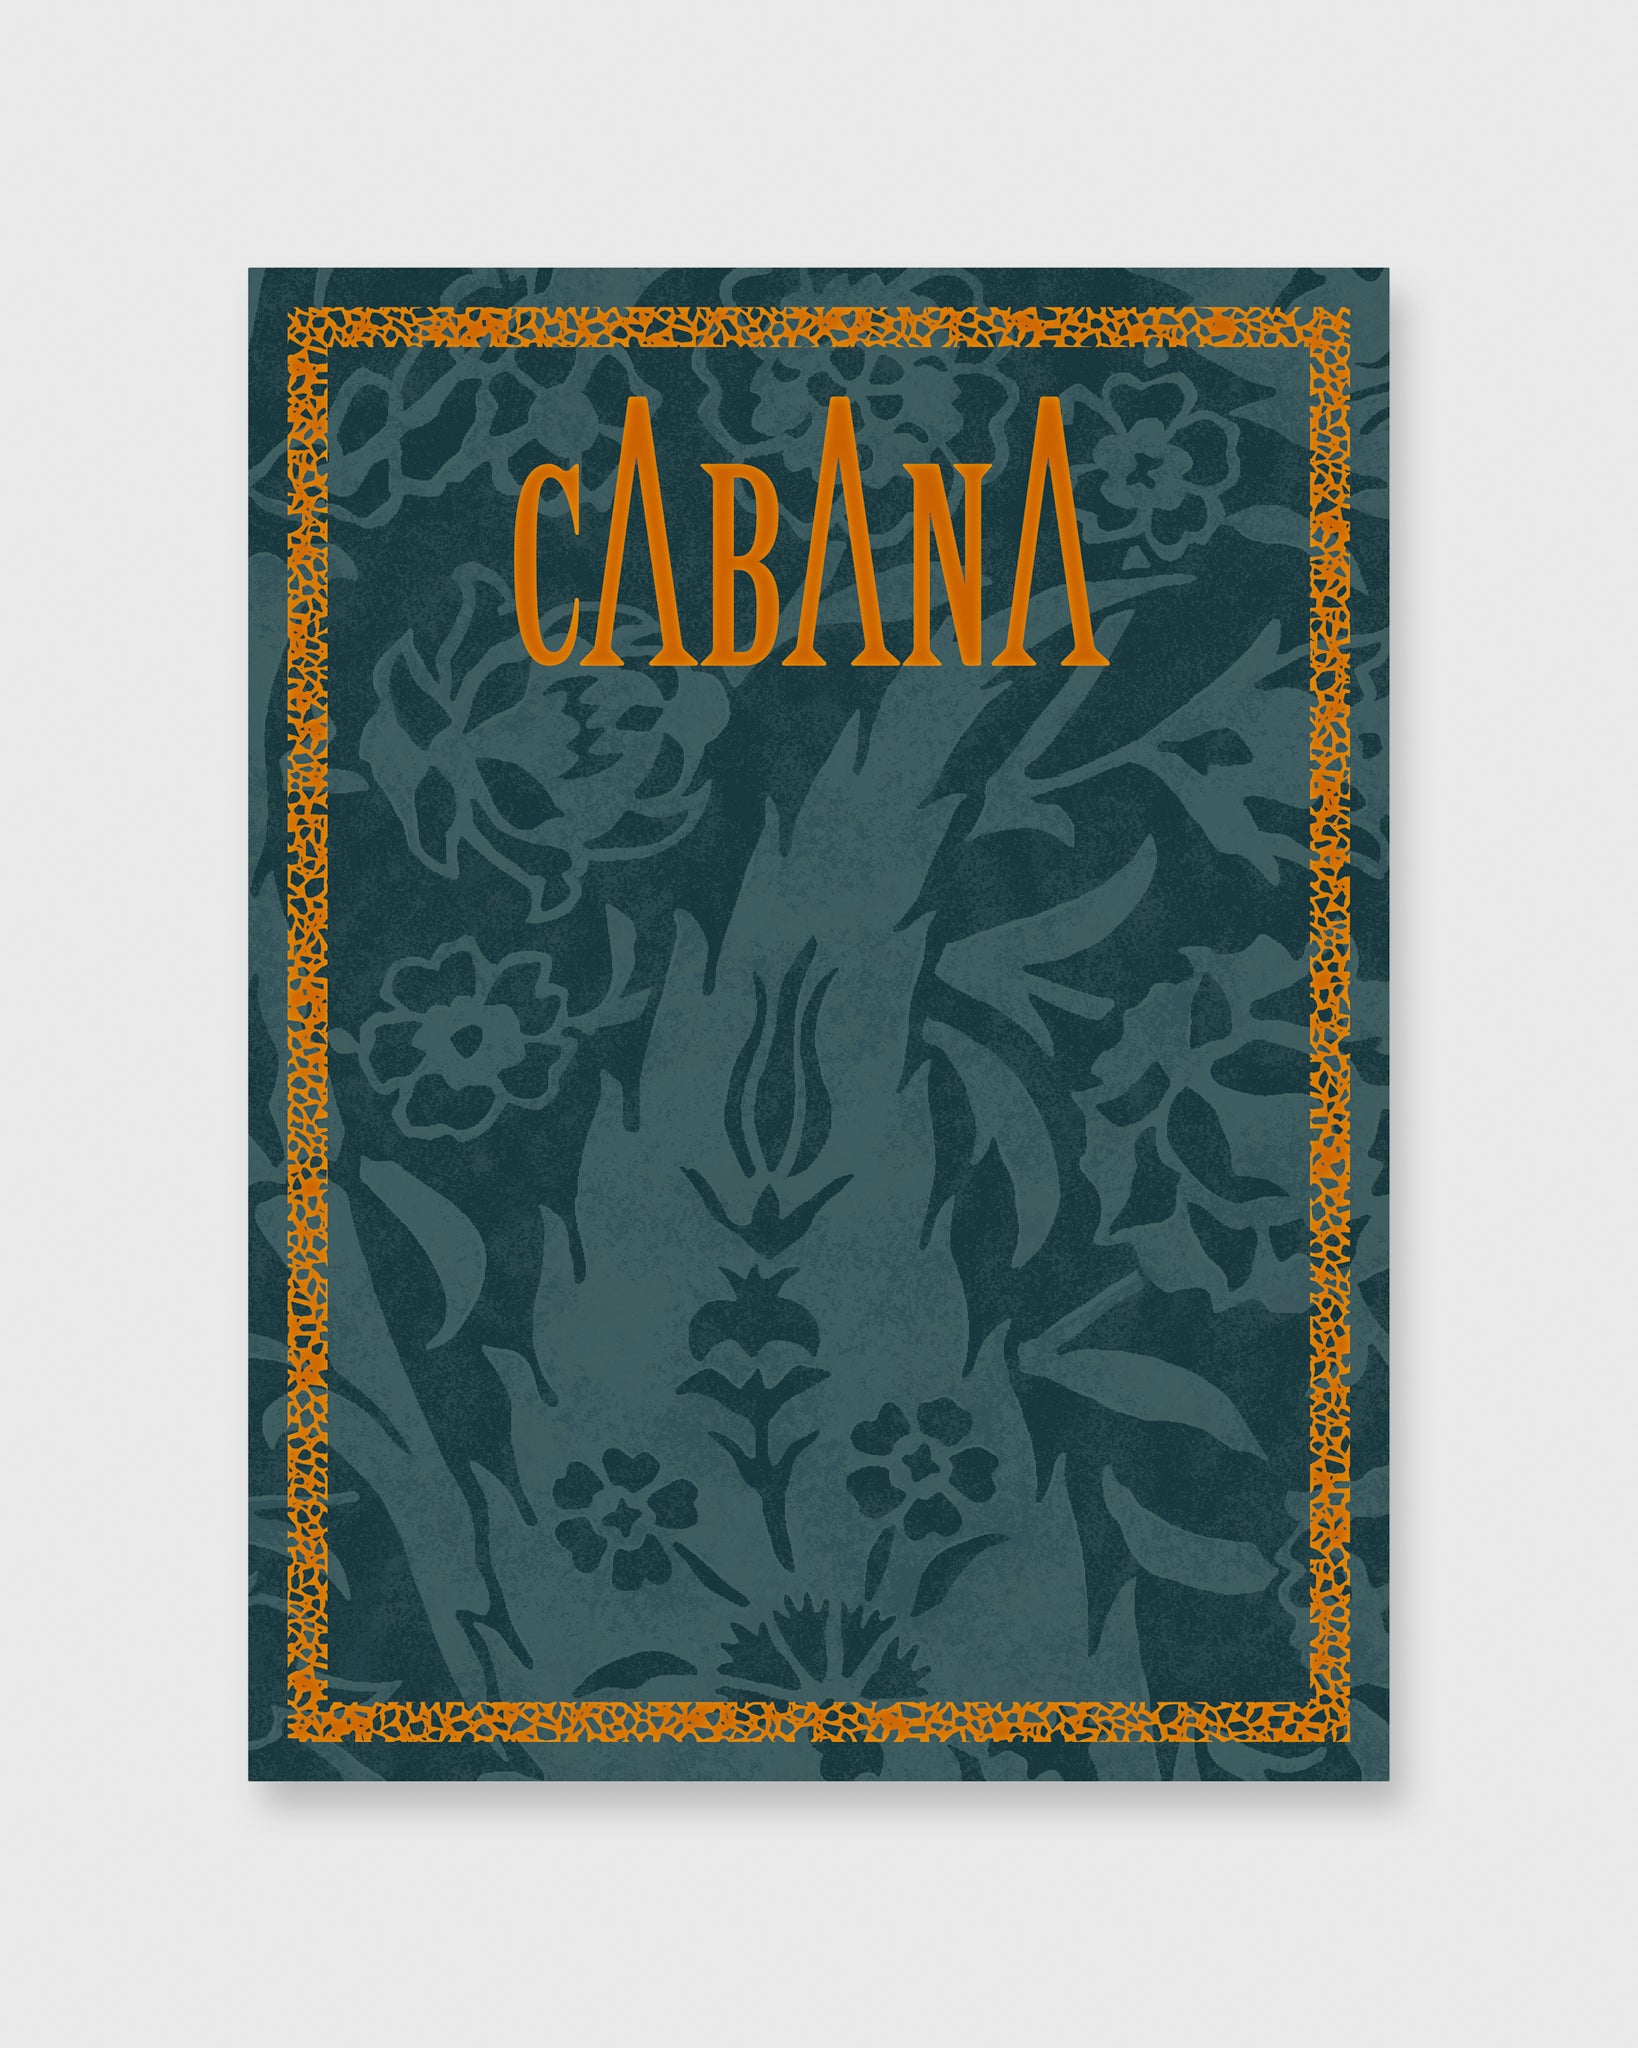 Cabana Magazine - Issue No. 16